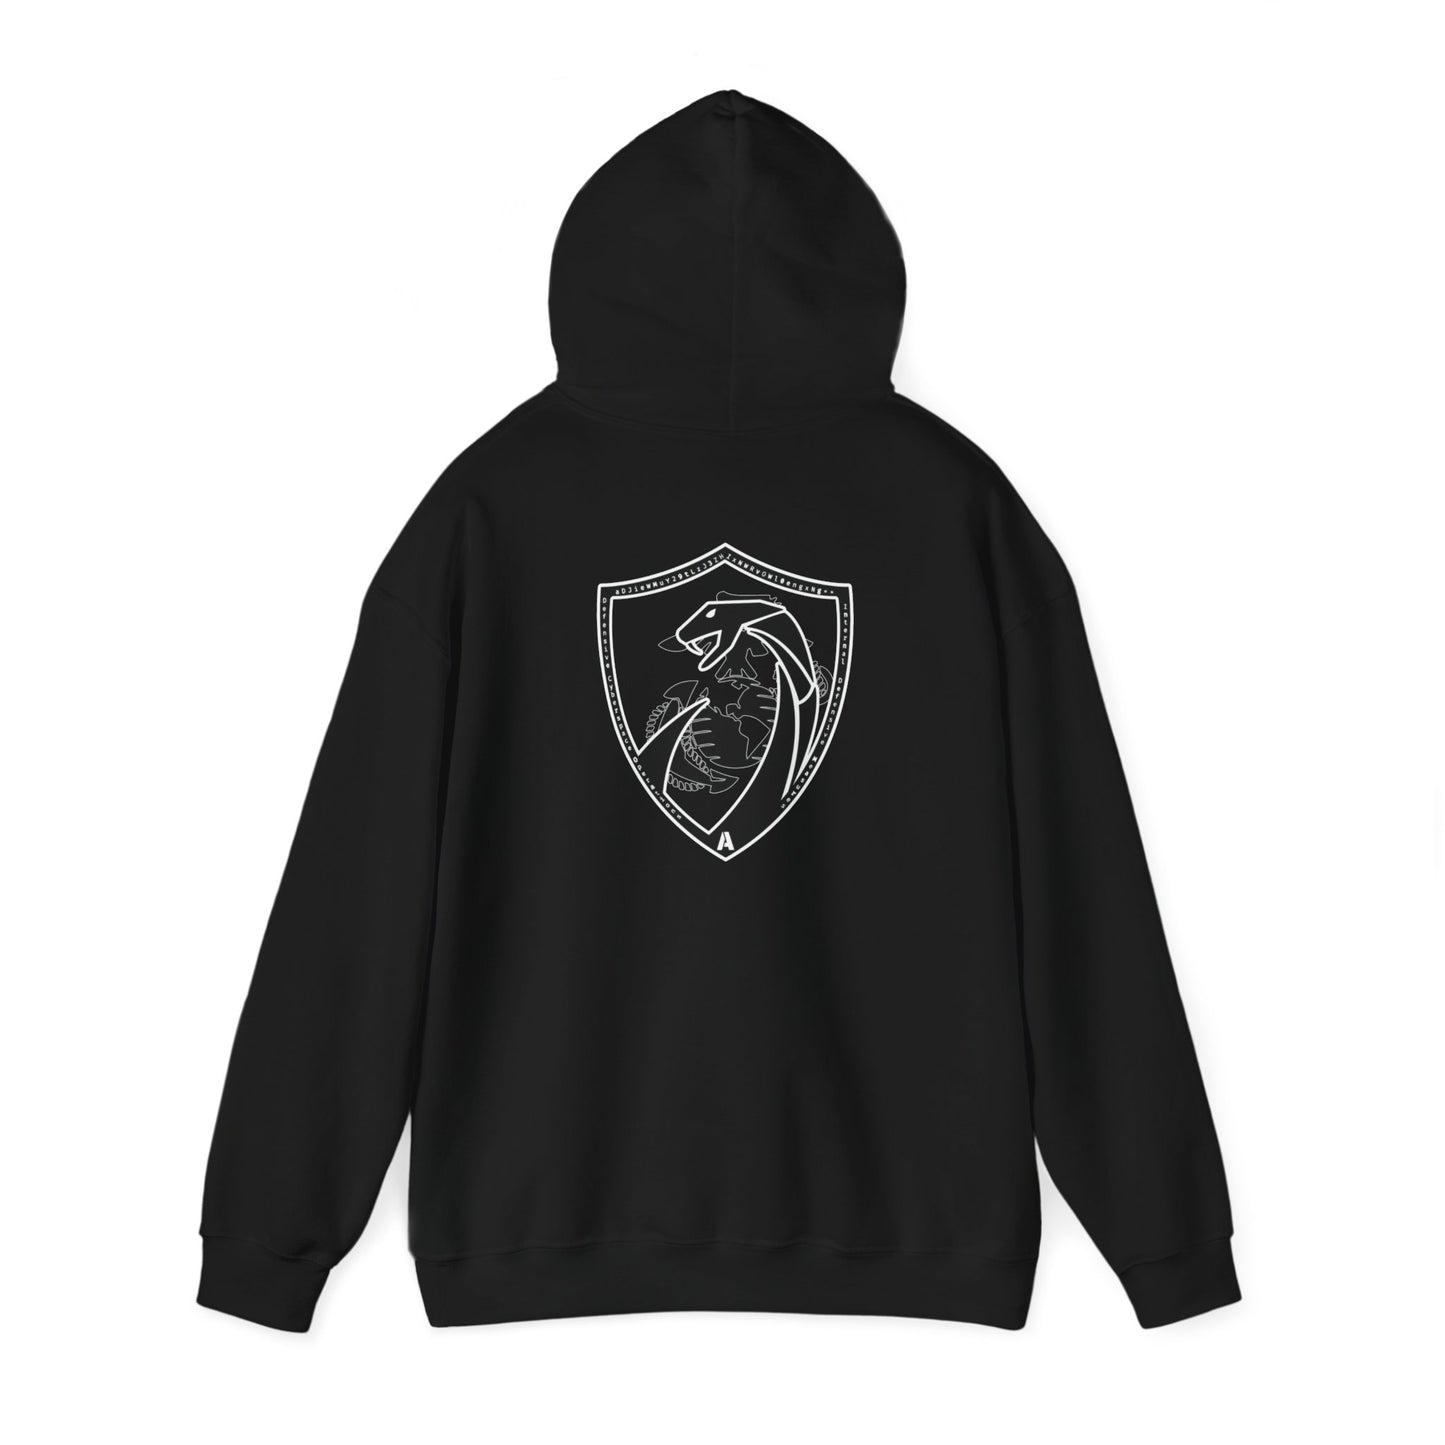 Defensive Cyber Ops Hooded Sweatshirt